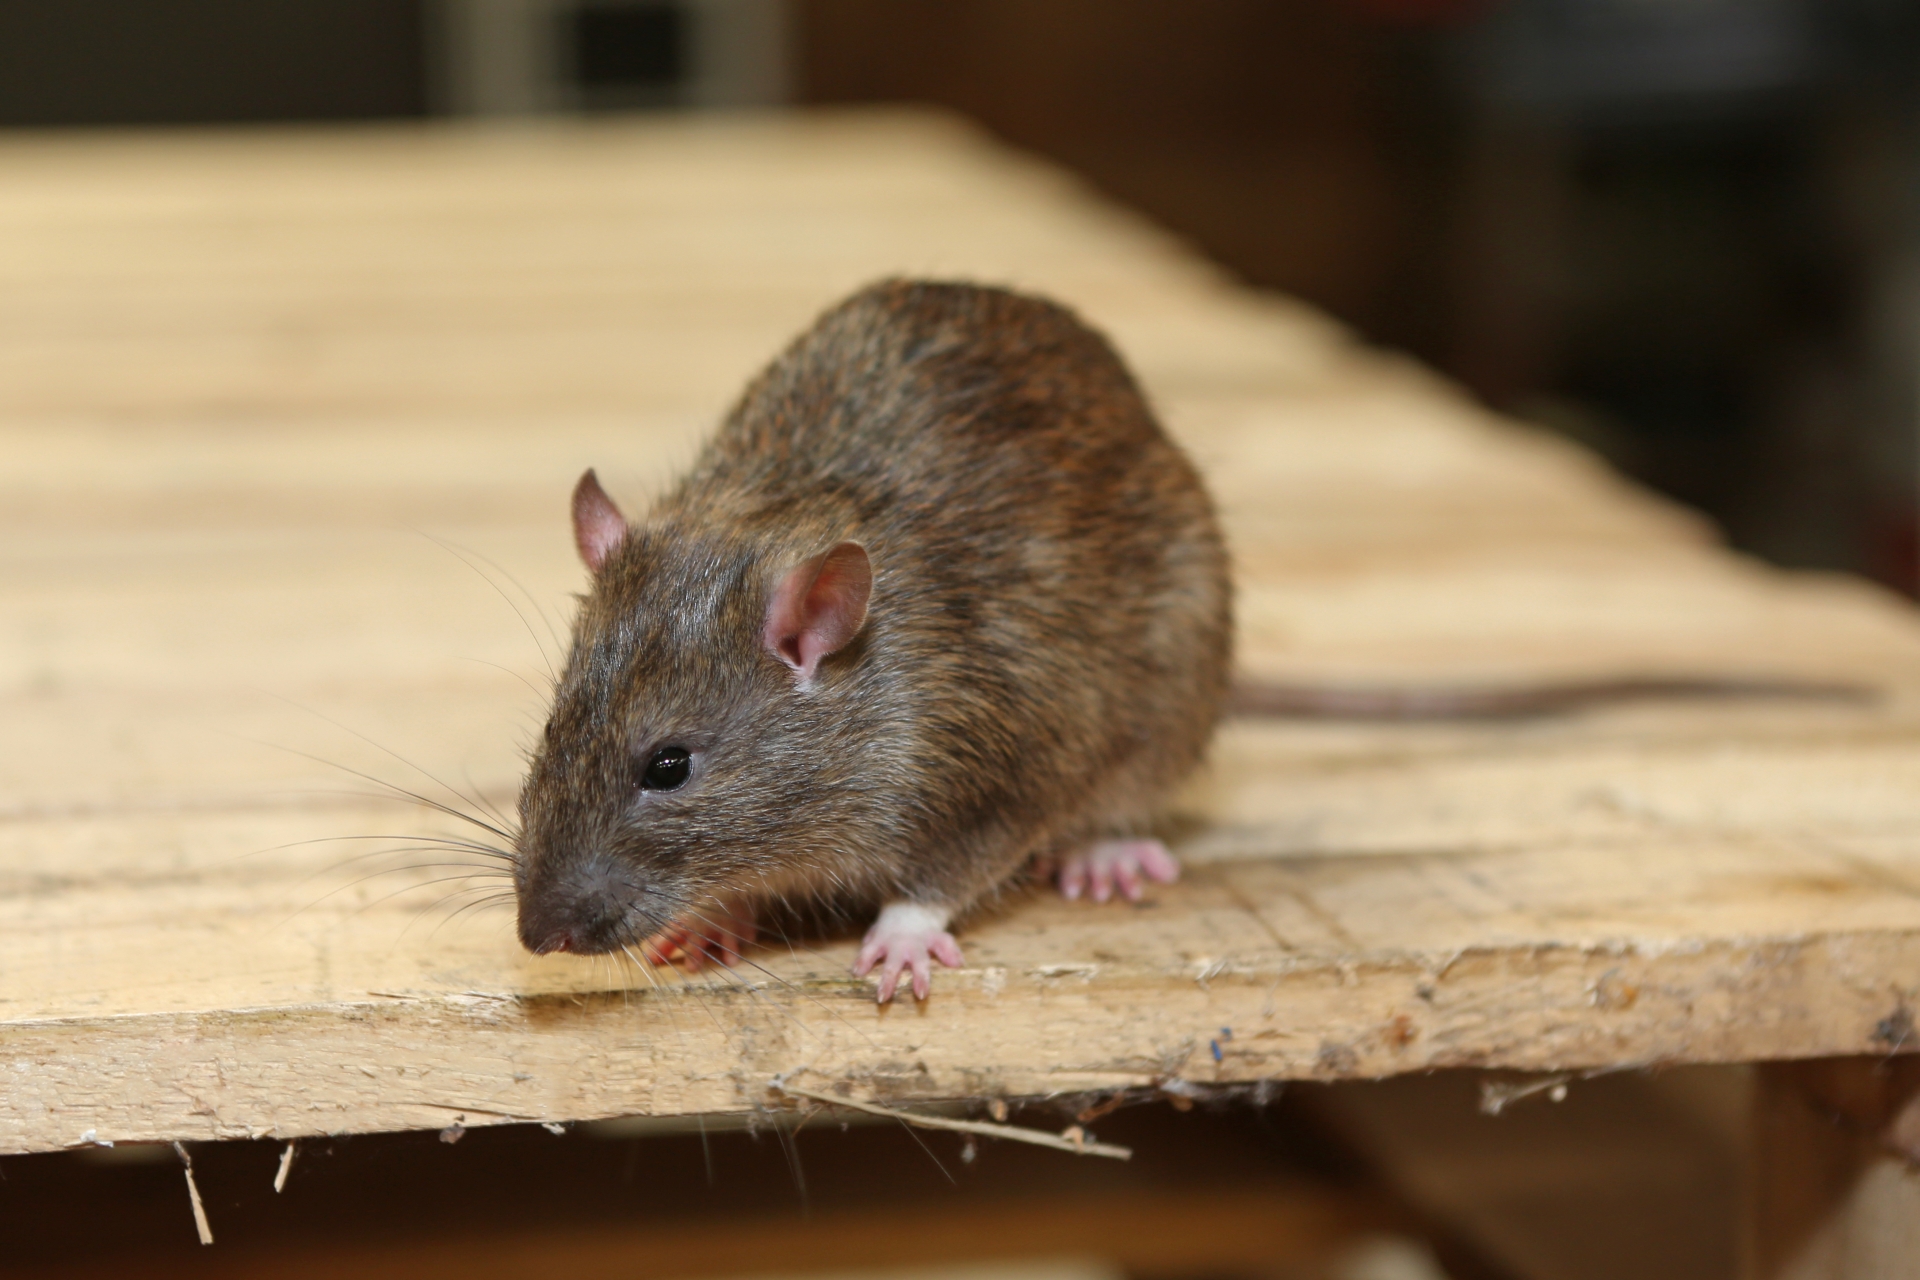 Rat extermination, Pest Control in Bushey, Bushey Heath, WD23. Call Now 020 8166 9746